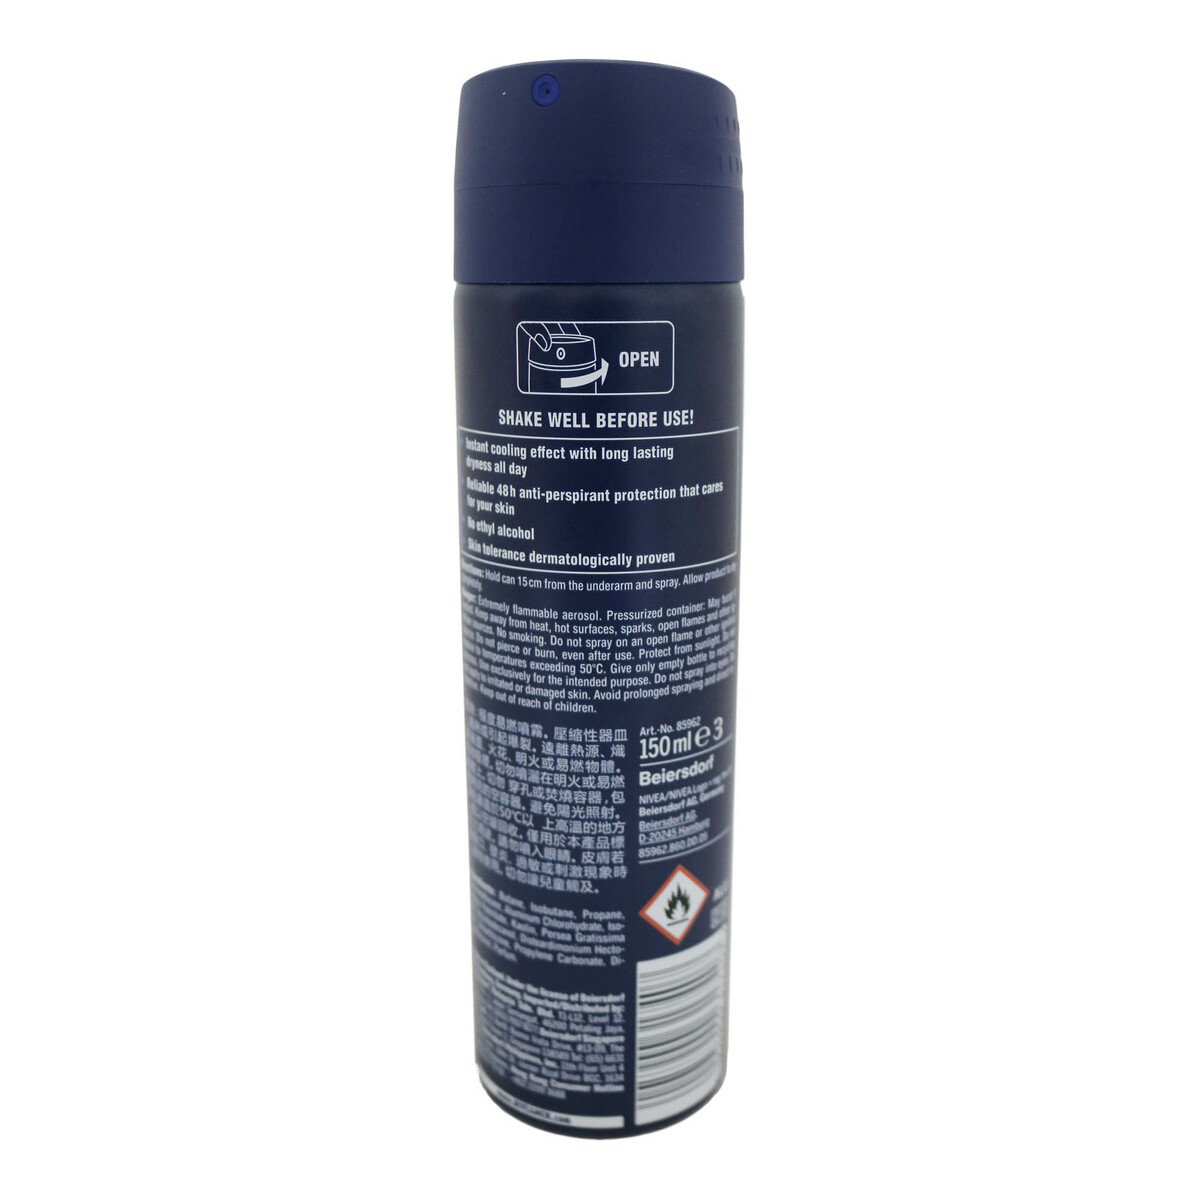 Nivea Deodorant Cool Powder Spray 150ml